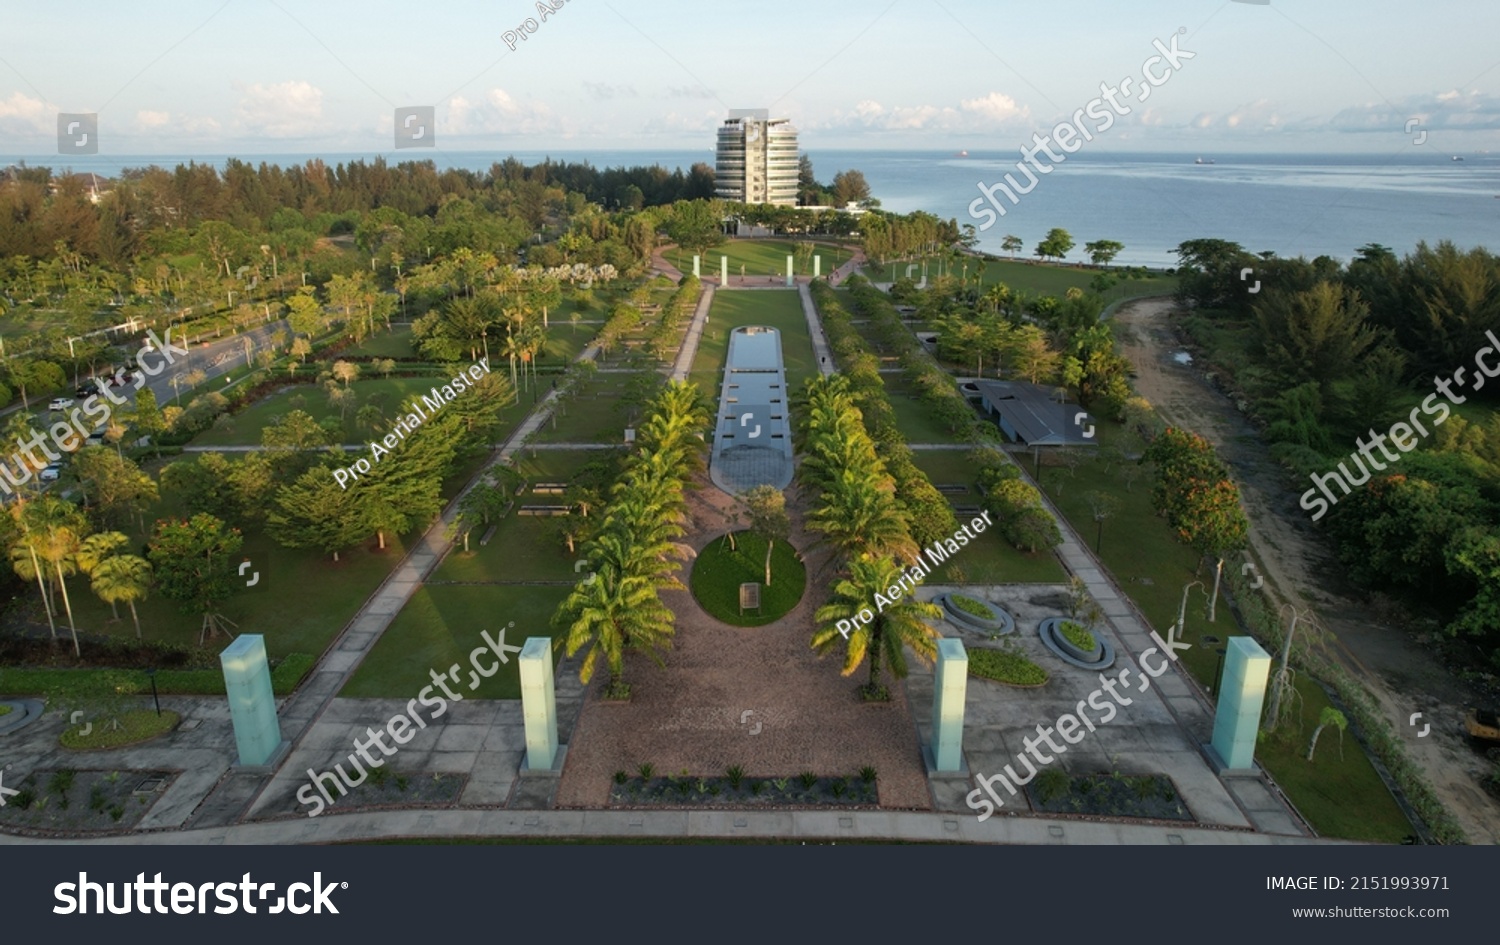 Stock Photo Miri Sarawak Malaysia May The Beautiful Coastal Town Of Miri City A Hidden Gem 2151993971 